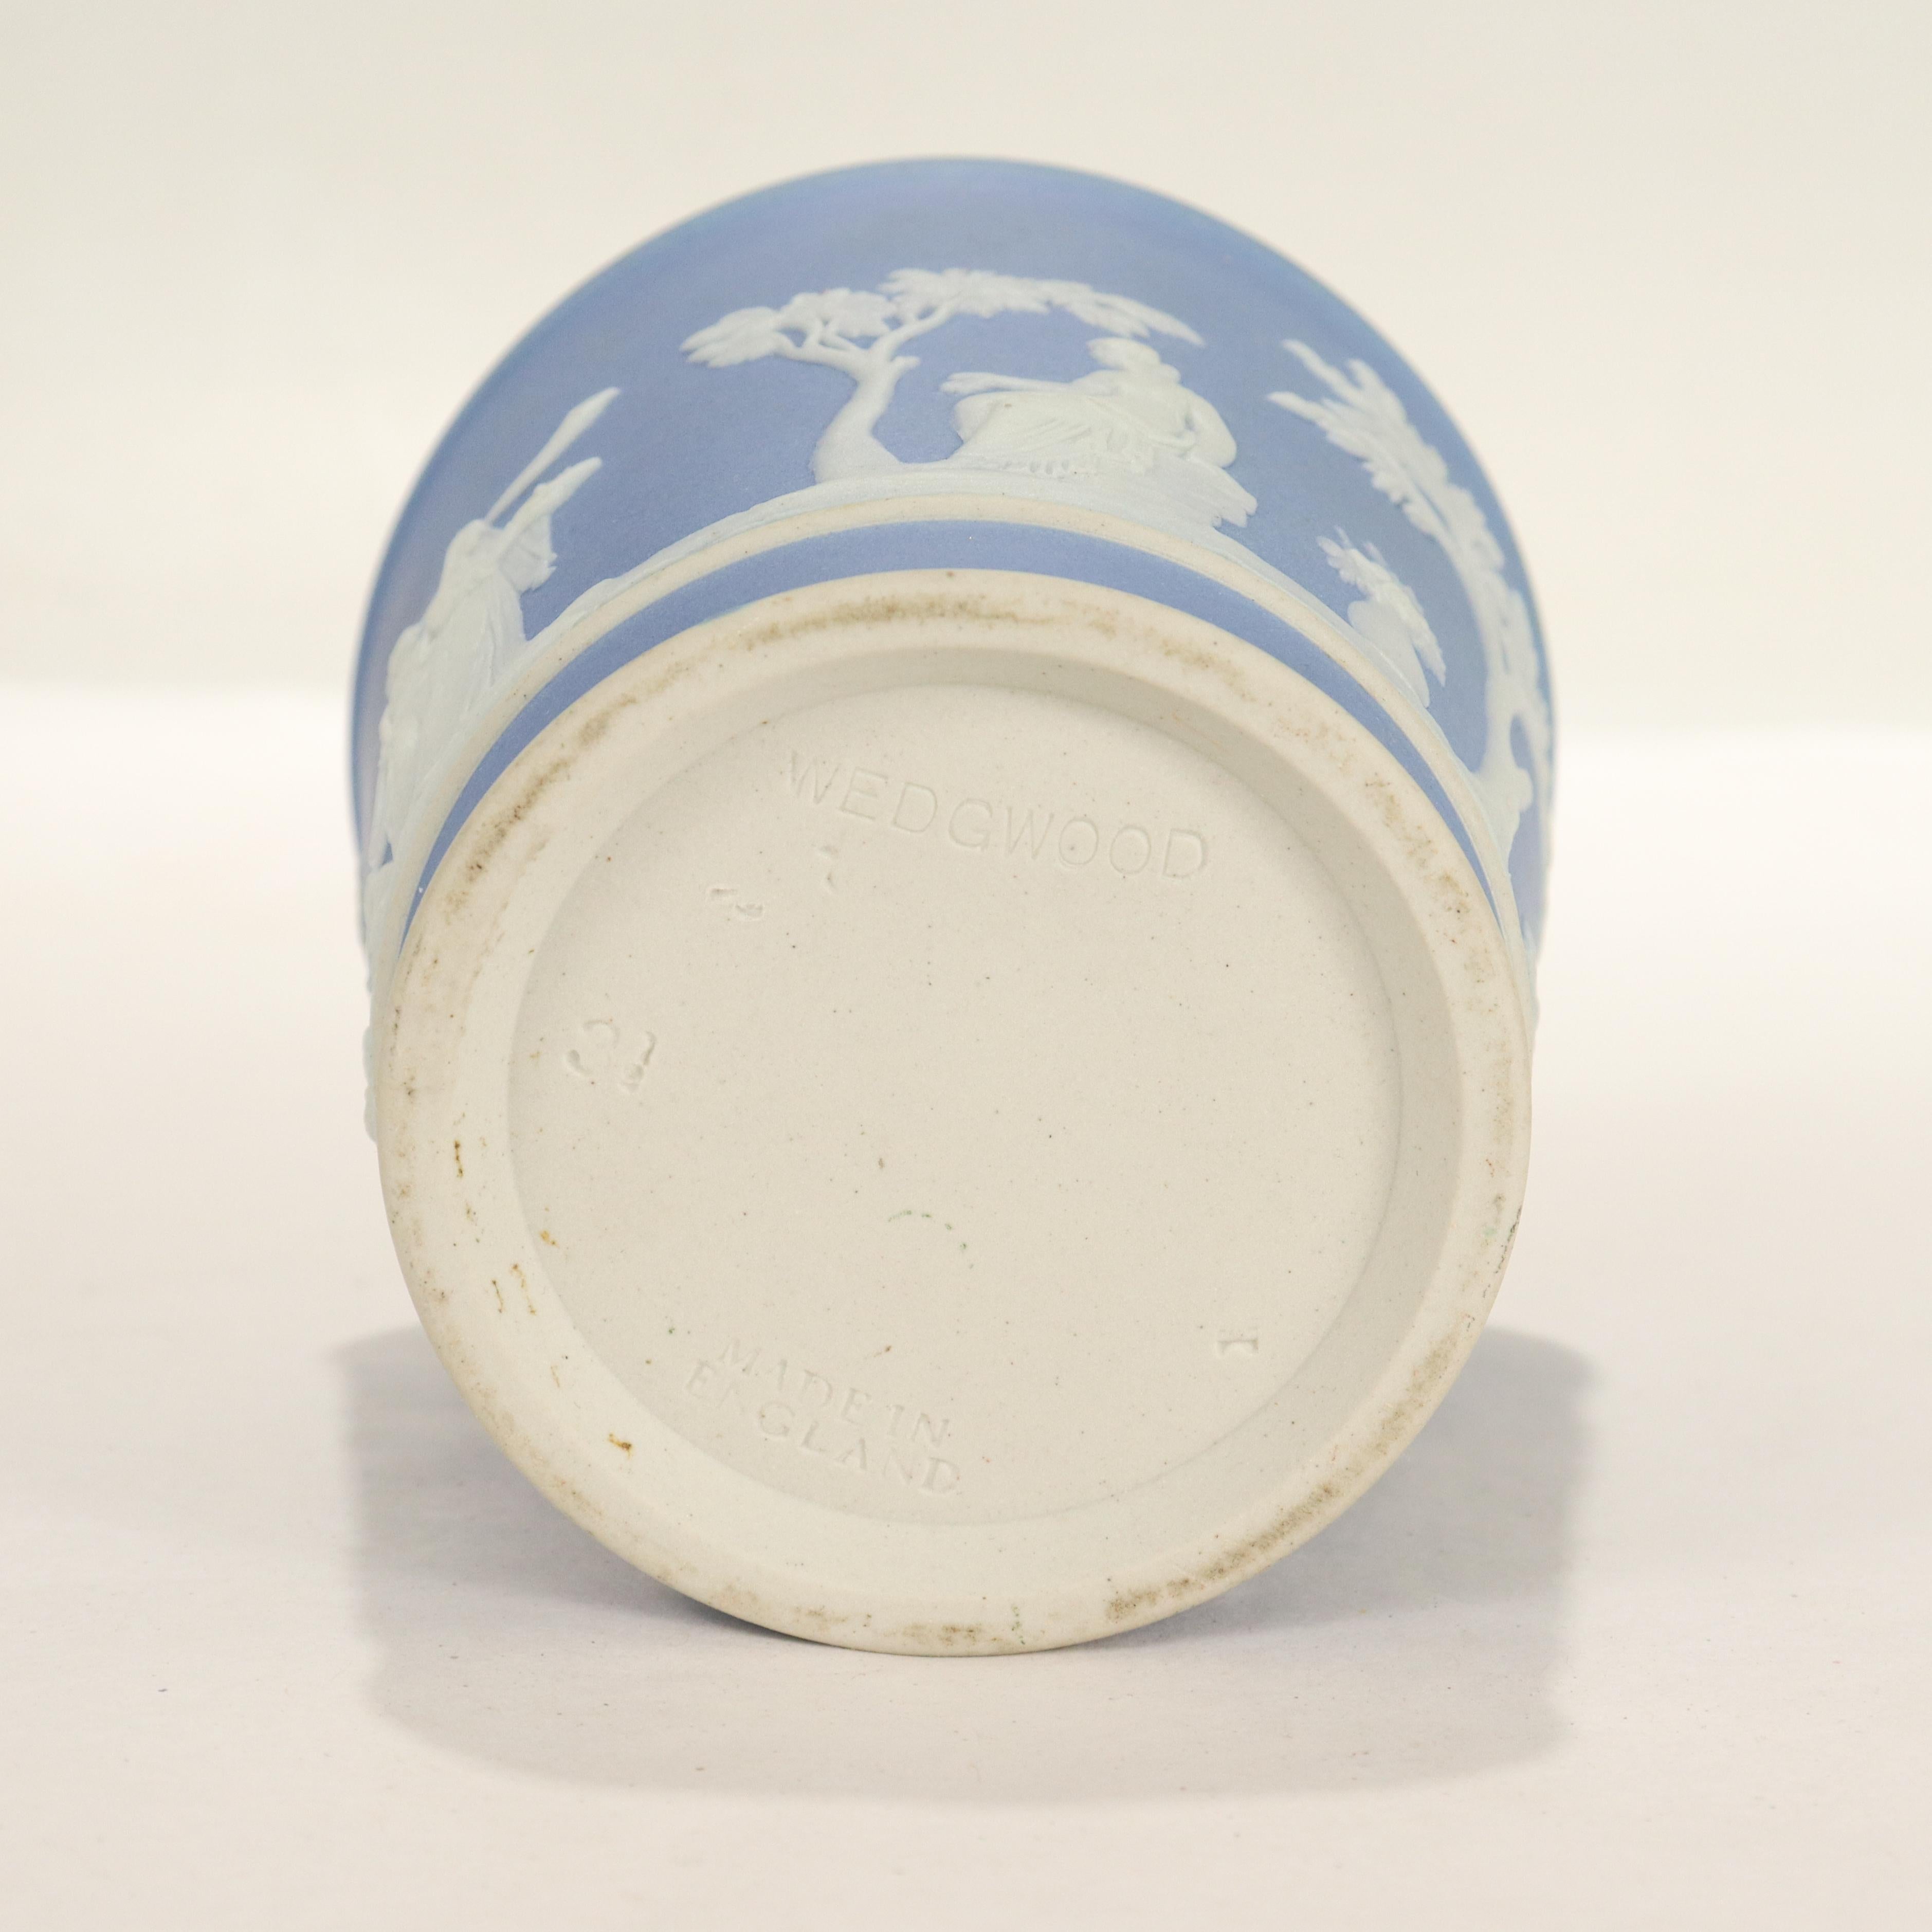 Porcelaine Gobelet ou gobelet ancien en jaspe bleu clair de Wedgwood en vente